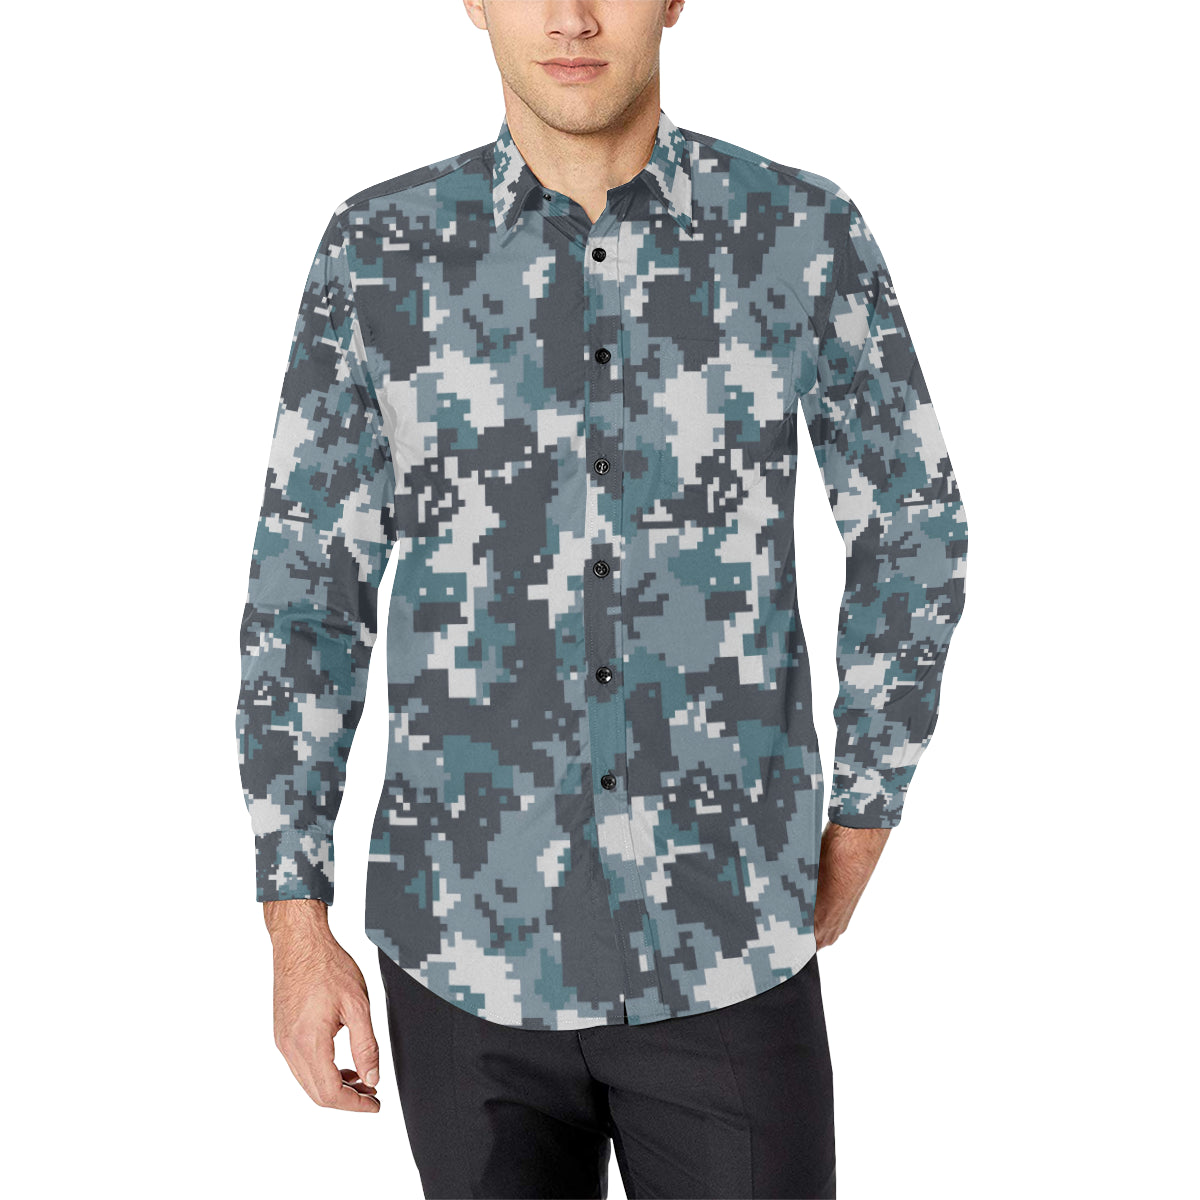 ACU Digital Urban Camouflage Men's Long Sleeve Shirt